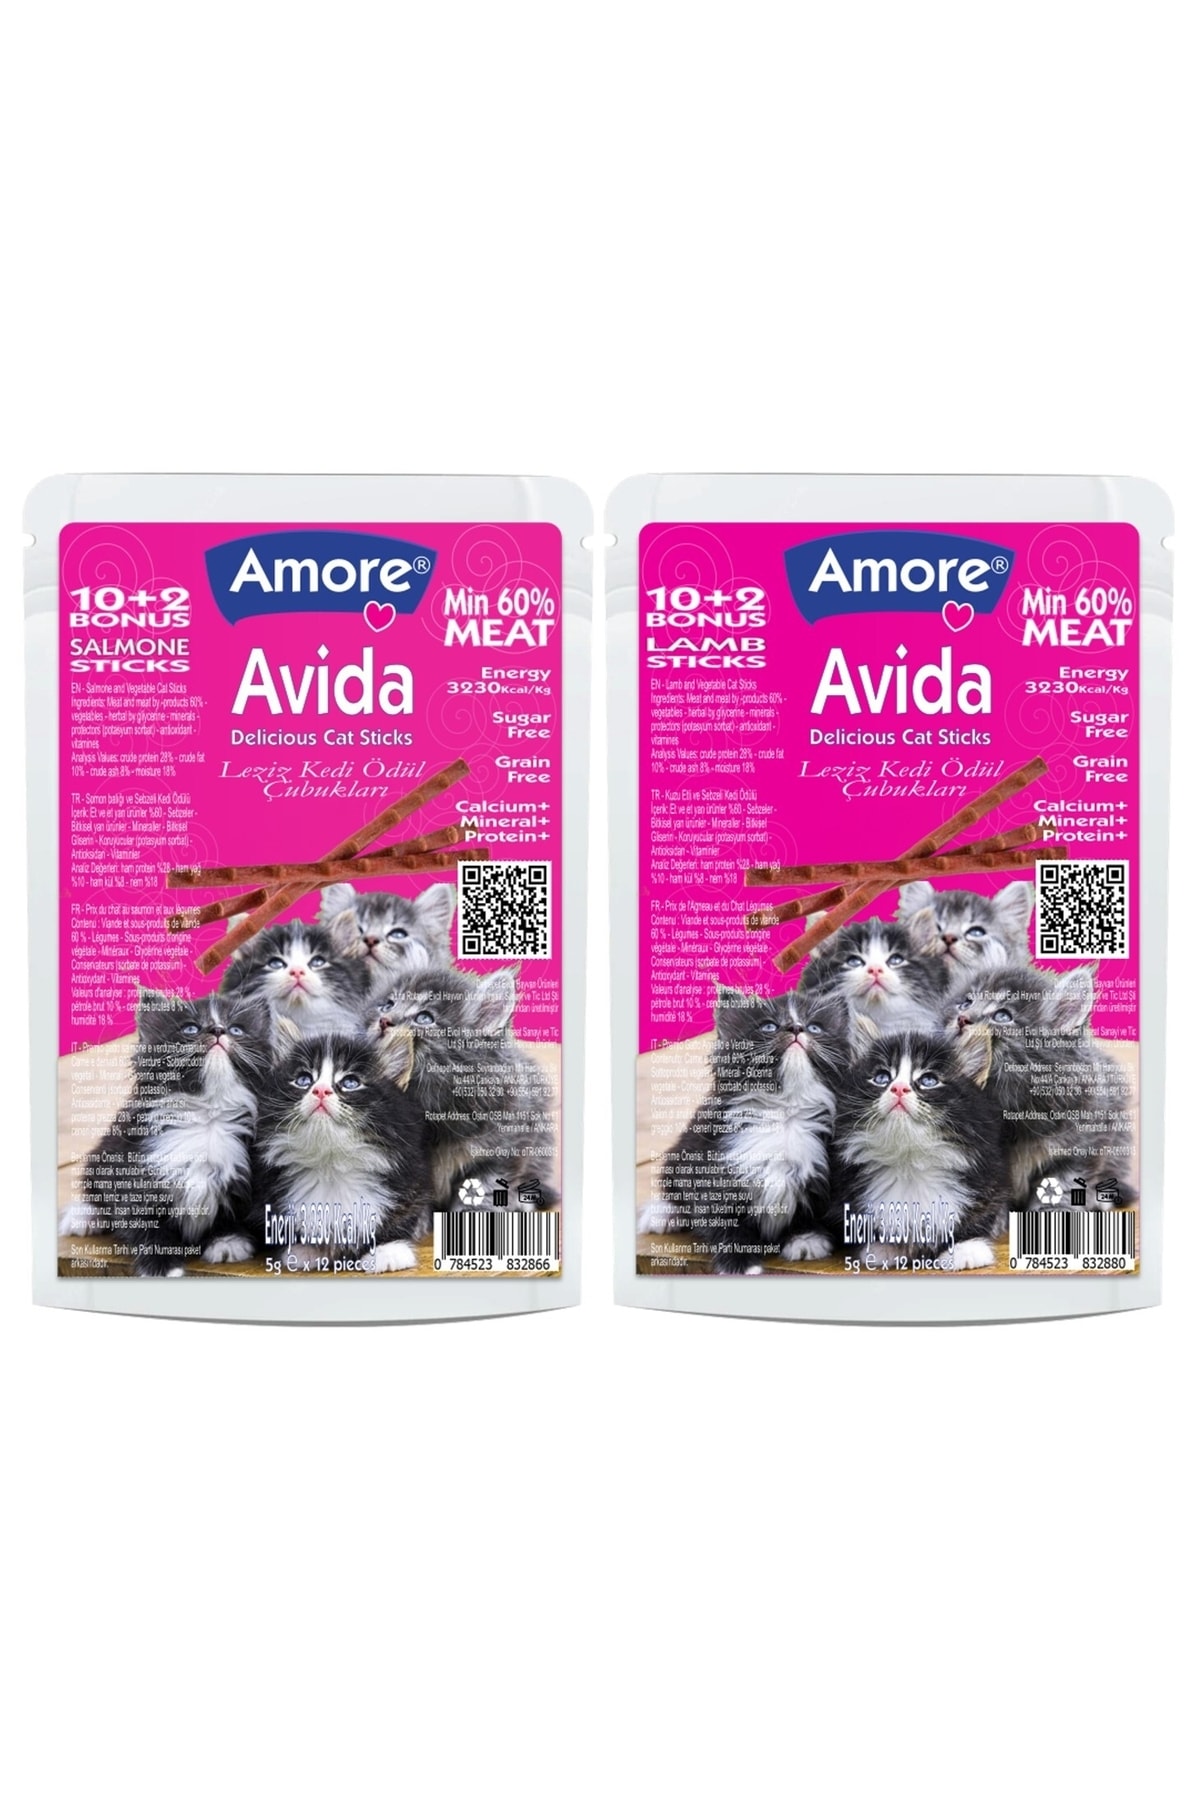 Amore Avida Salmone-12 Ve Lamb-12 Cat Sticks Balikli Ve Kuzulu Tahilsiz Kedi Odul Cubuklari